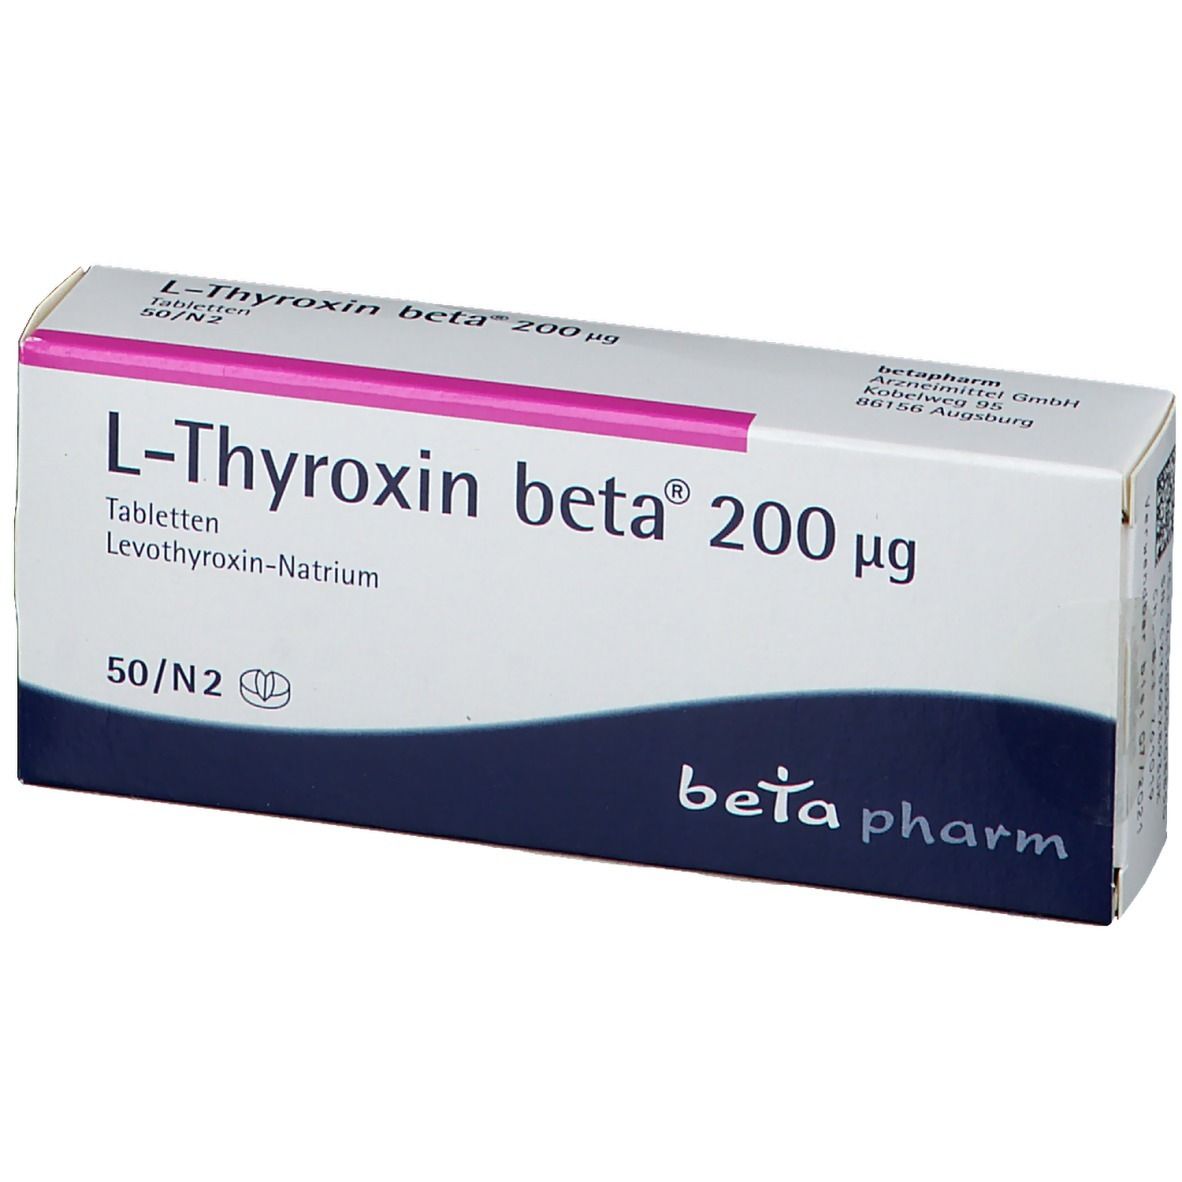 L-Thyroxin beta® 200 ug